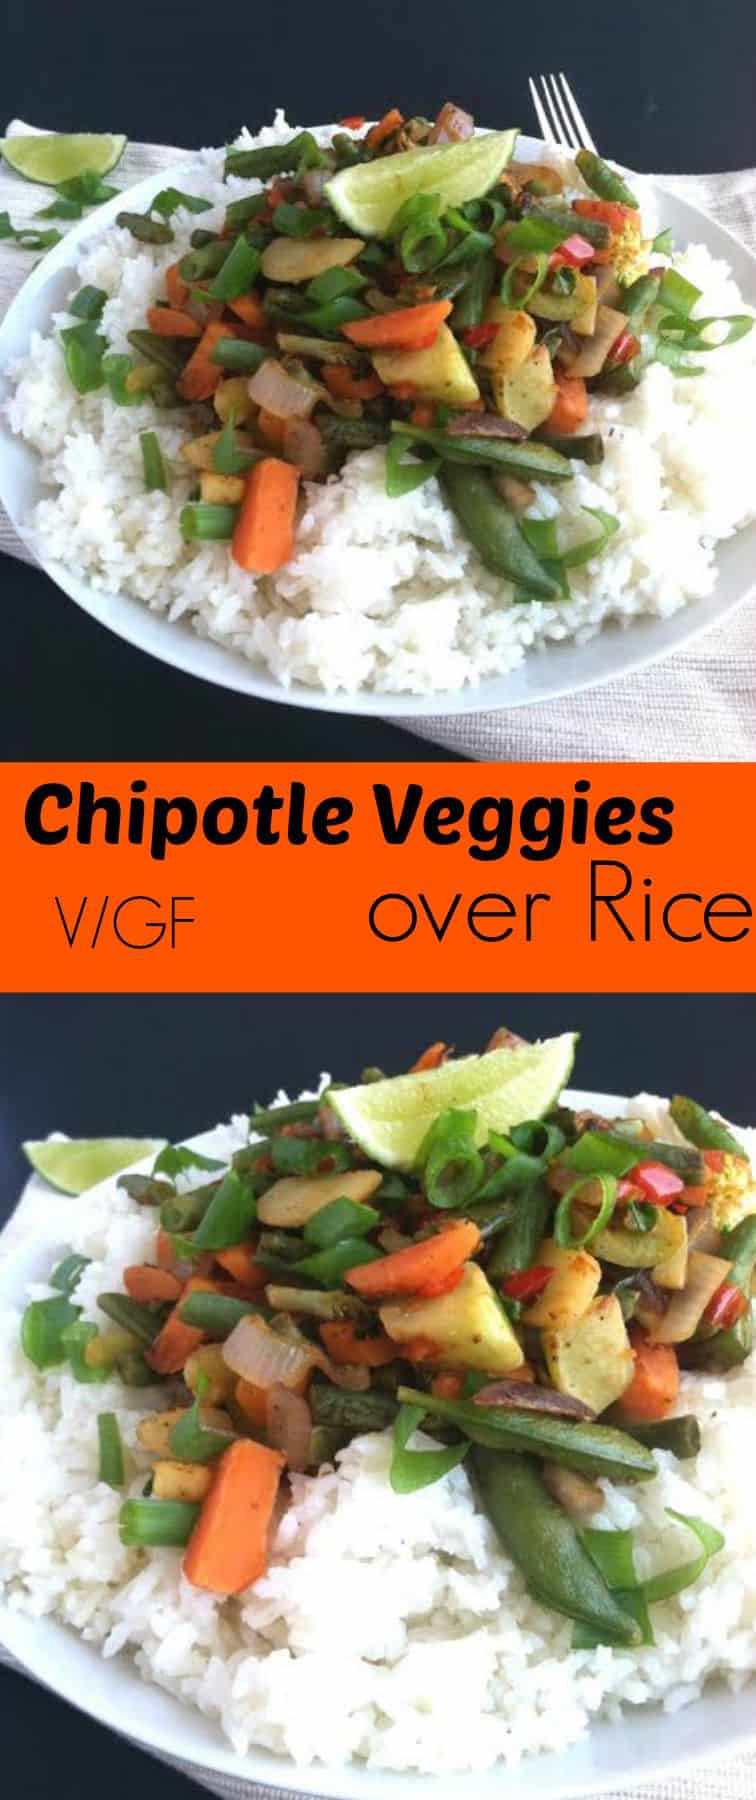 Chipotle Veggies over Rice